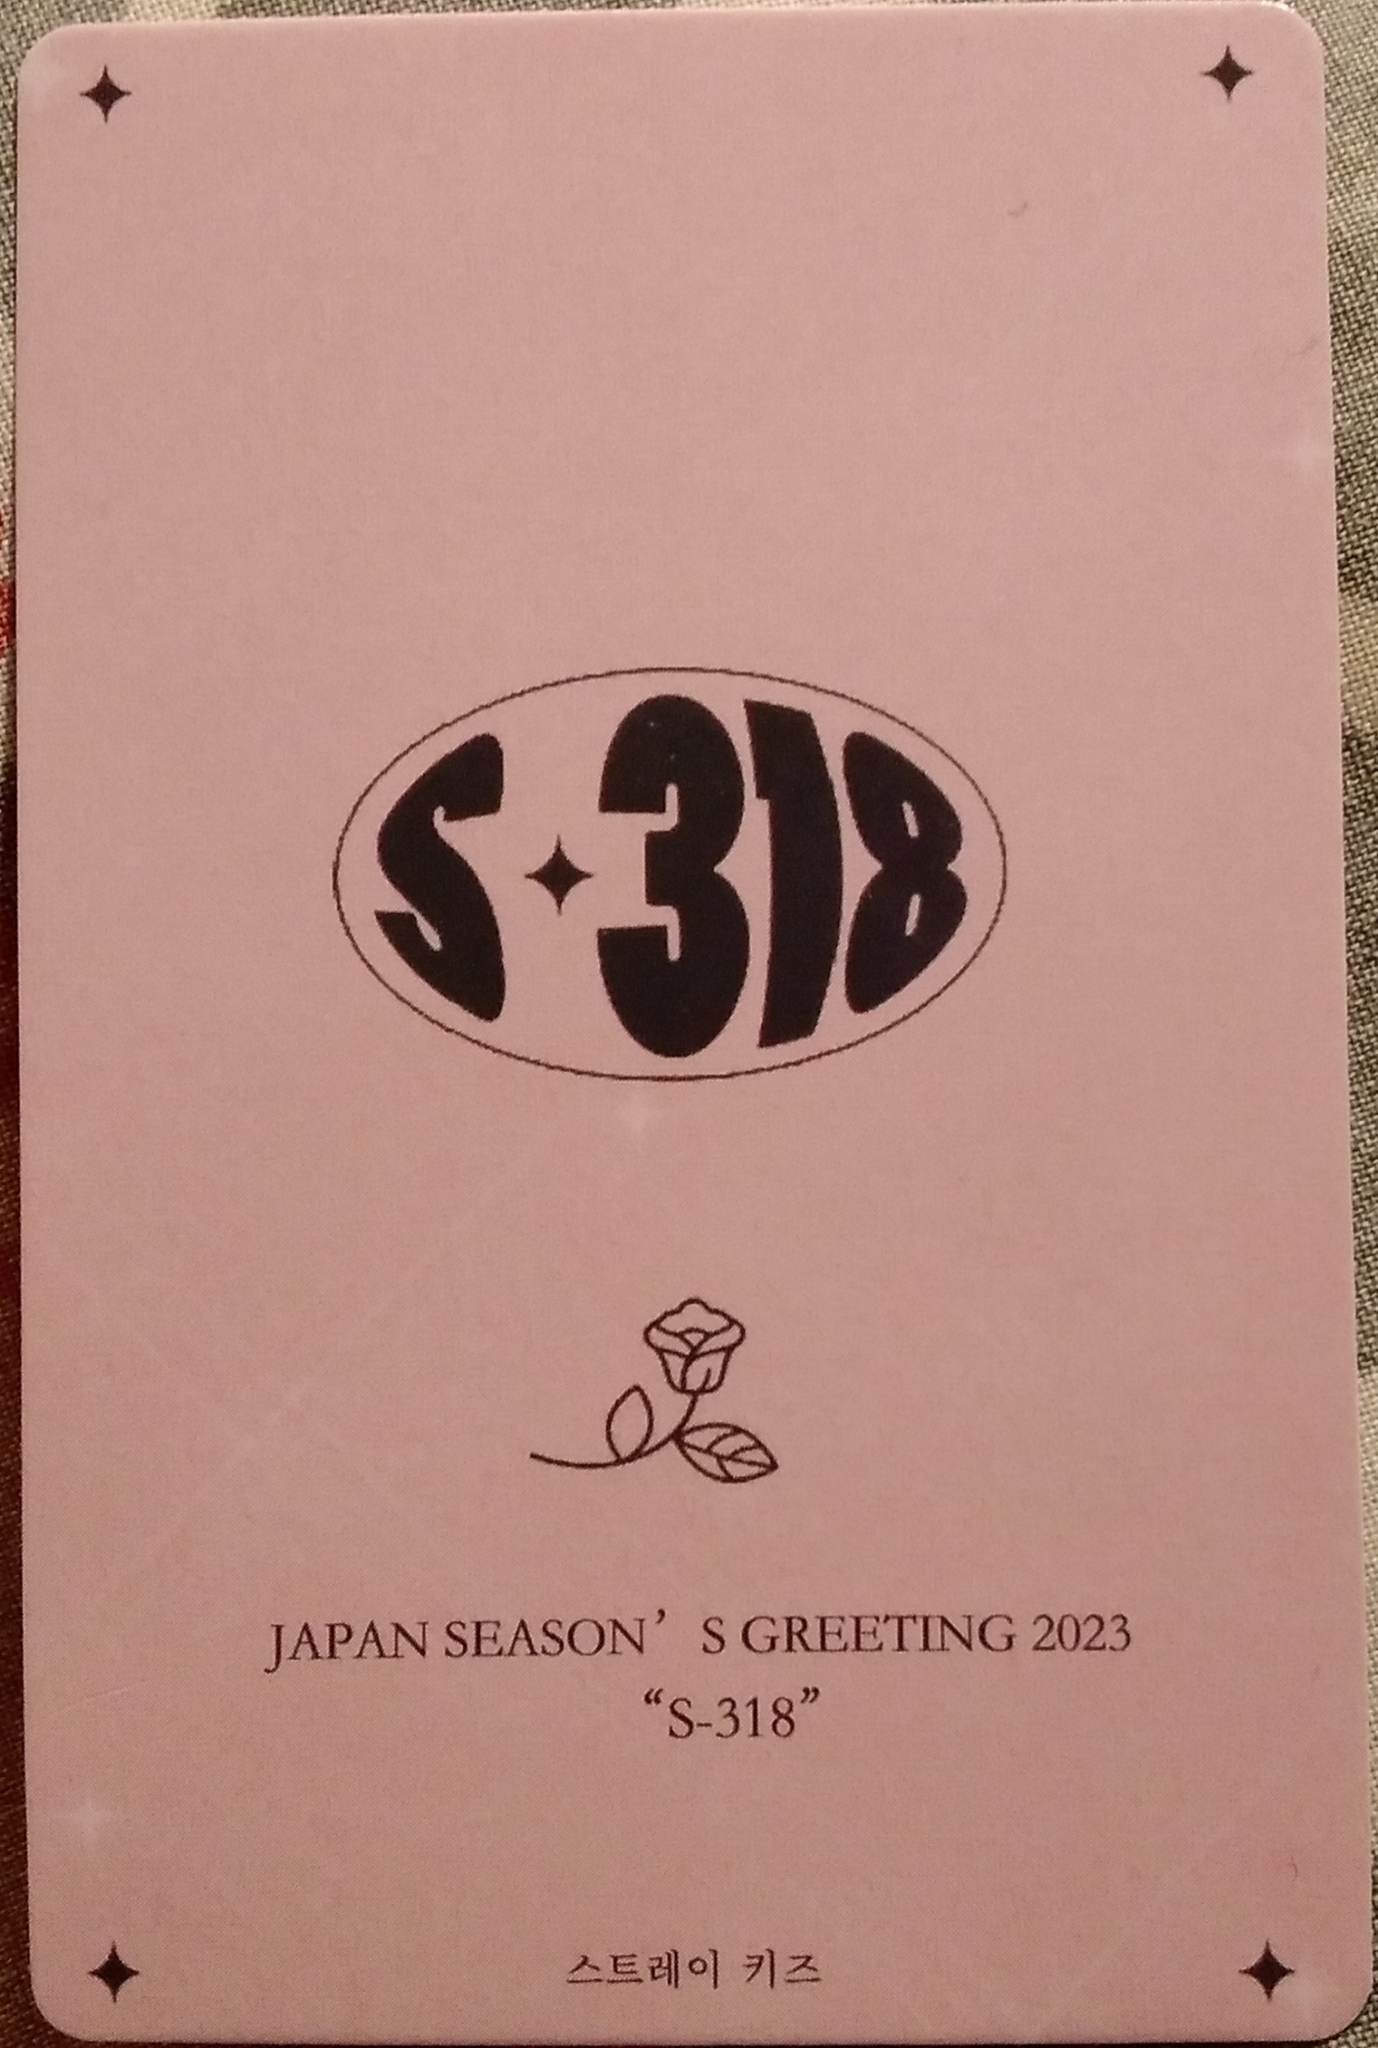 Photocard  STRAYKIDS  Japan season s greetings 2023  "S-318"  Seugmin  Jeong in